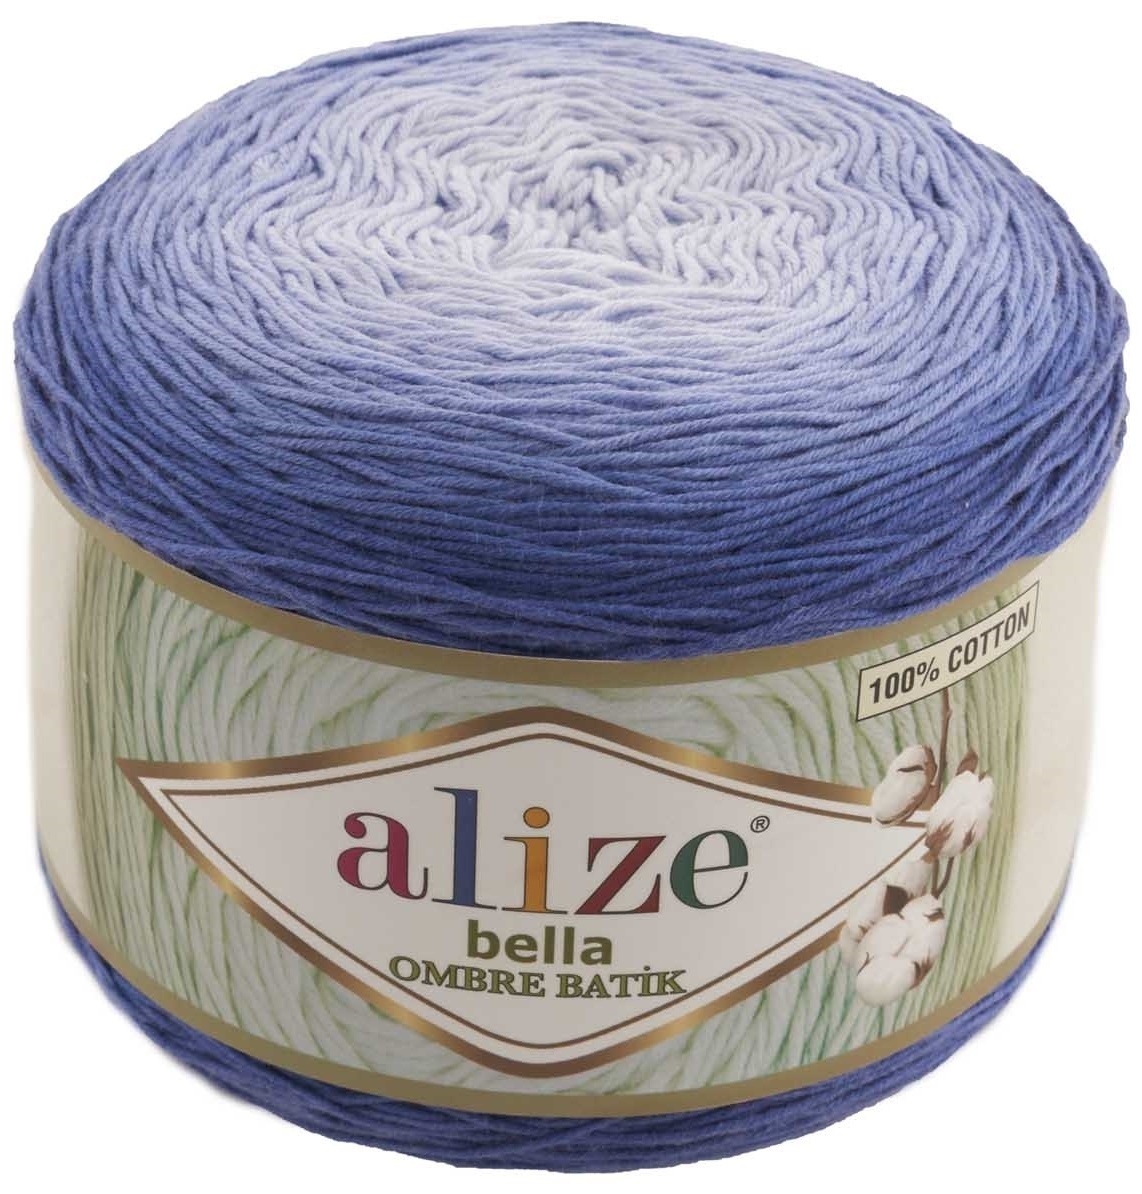 Alize Bella Ombre Batik 100% cotton, 2 Skein Value Pack, 500g фото 6